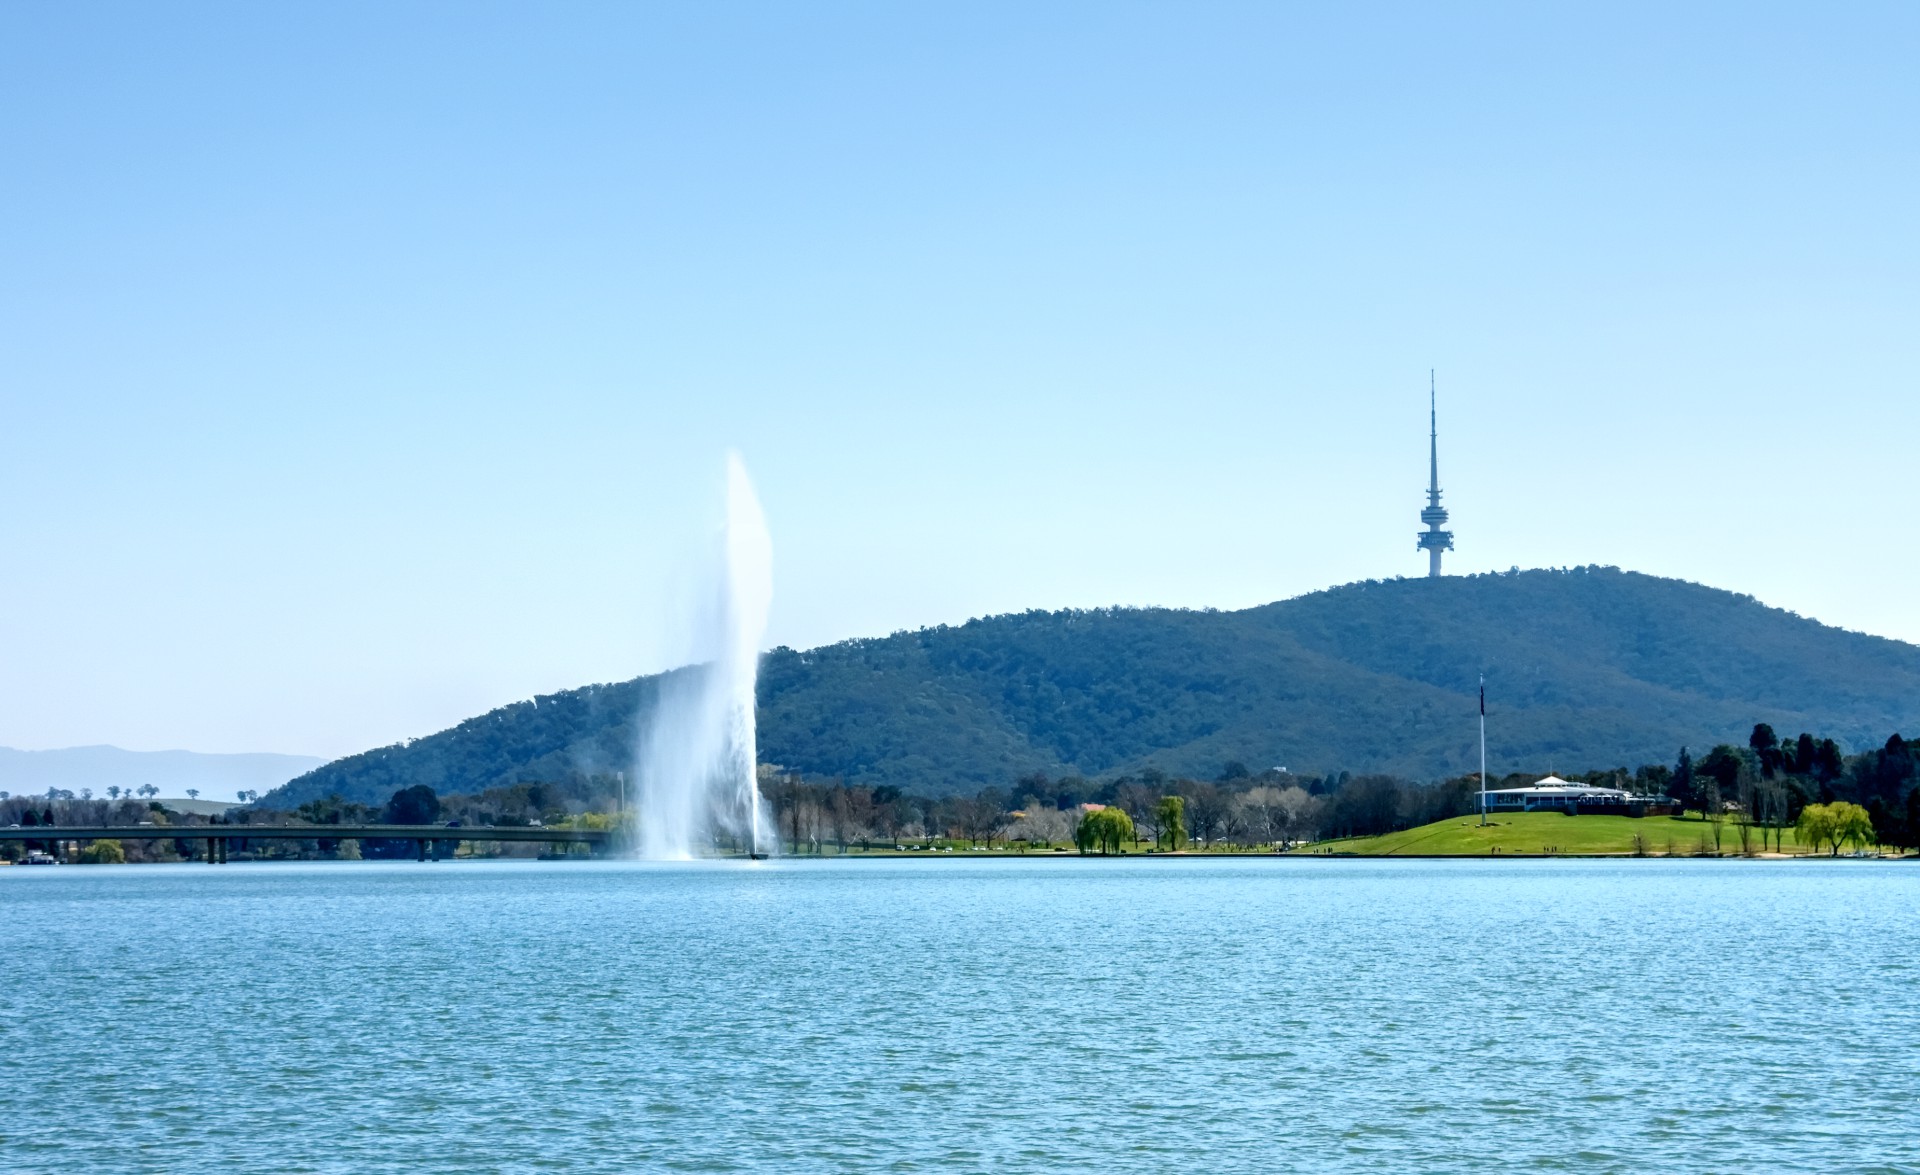 Canberra Image 4